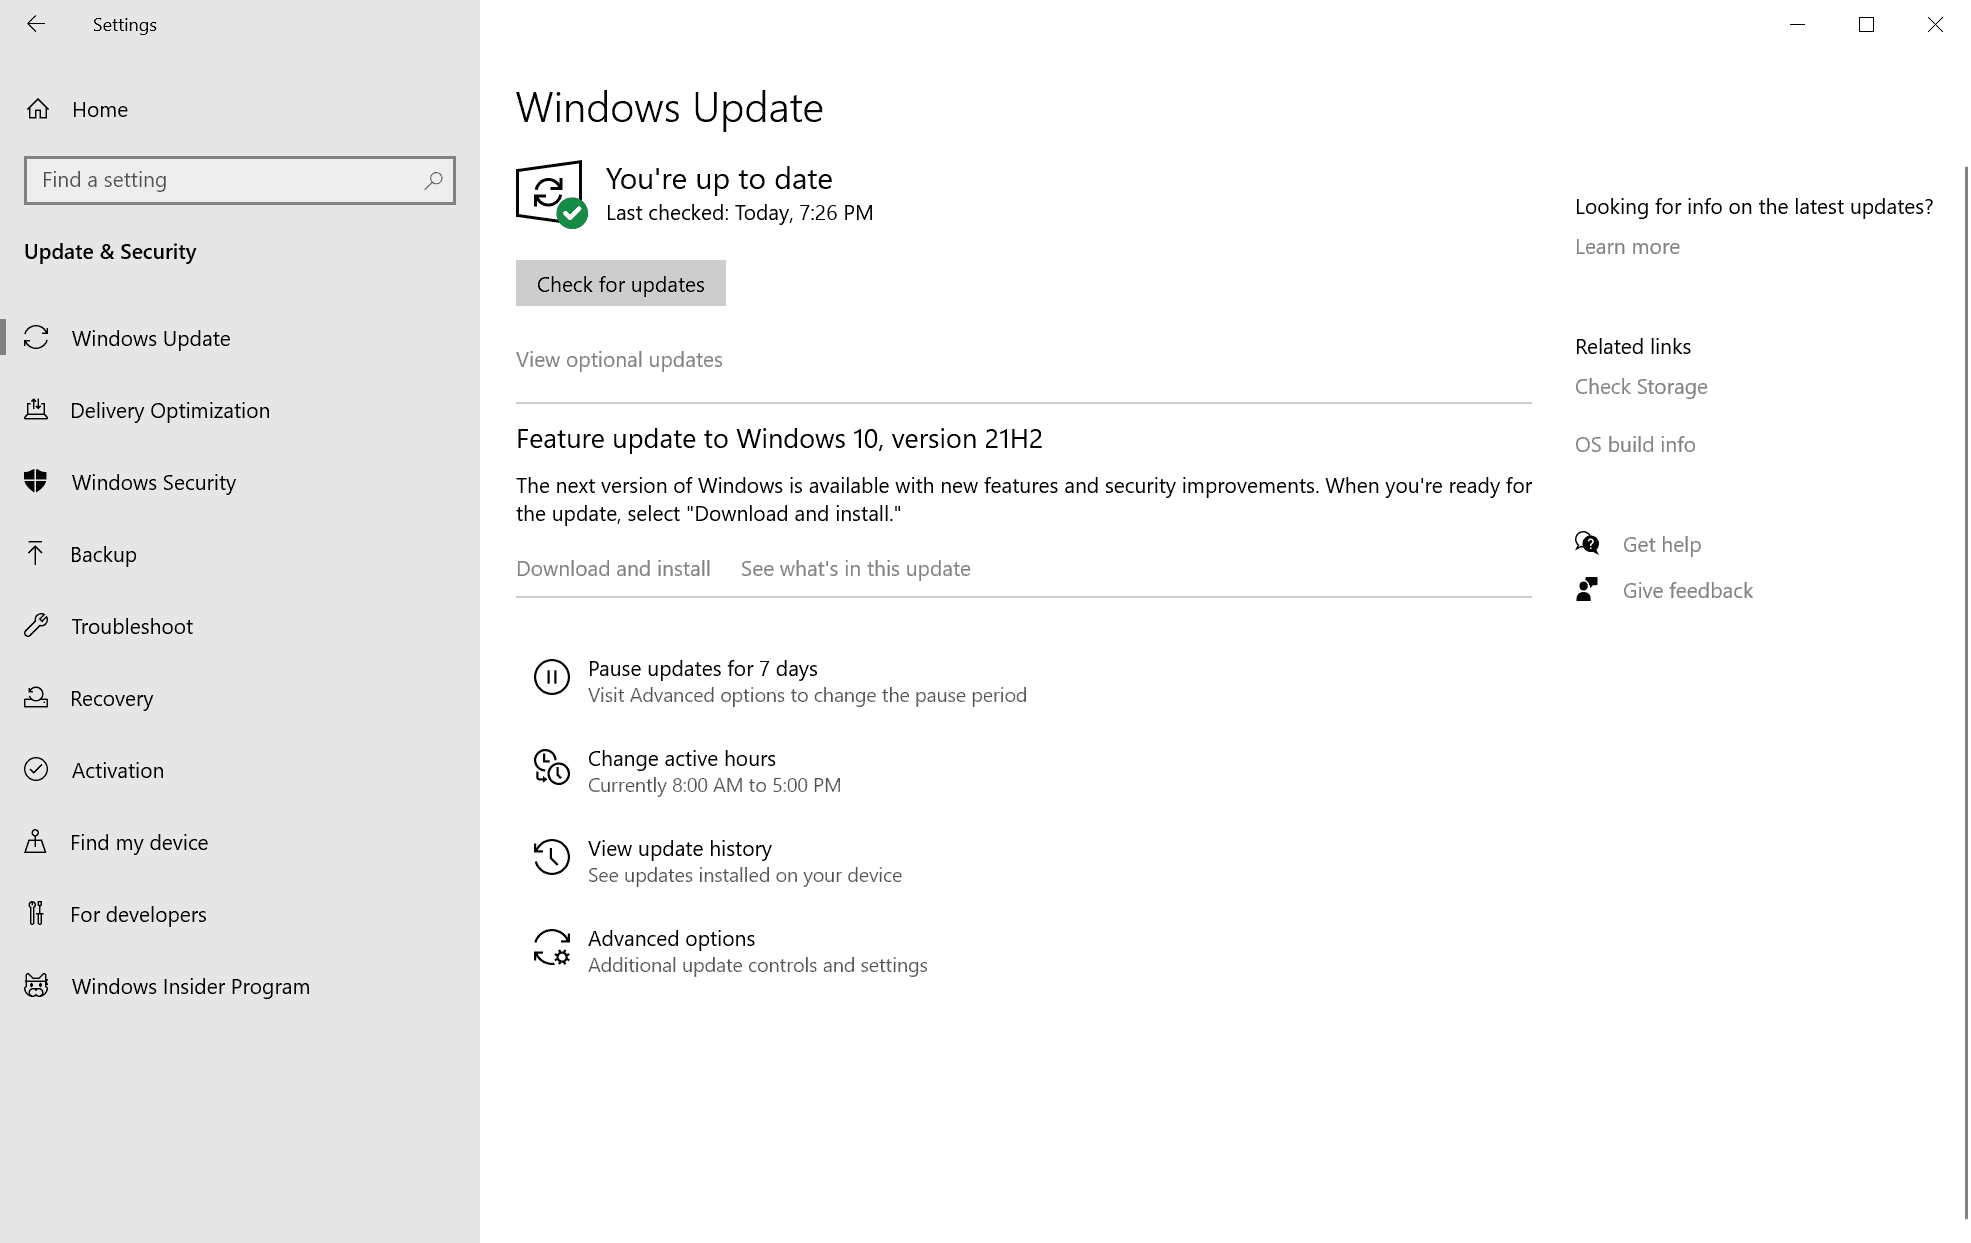 windows 10 version 21h2 released